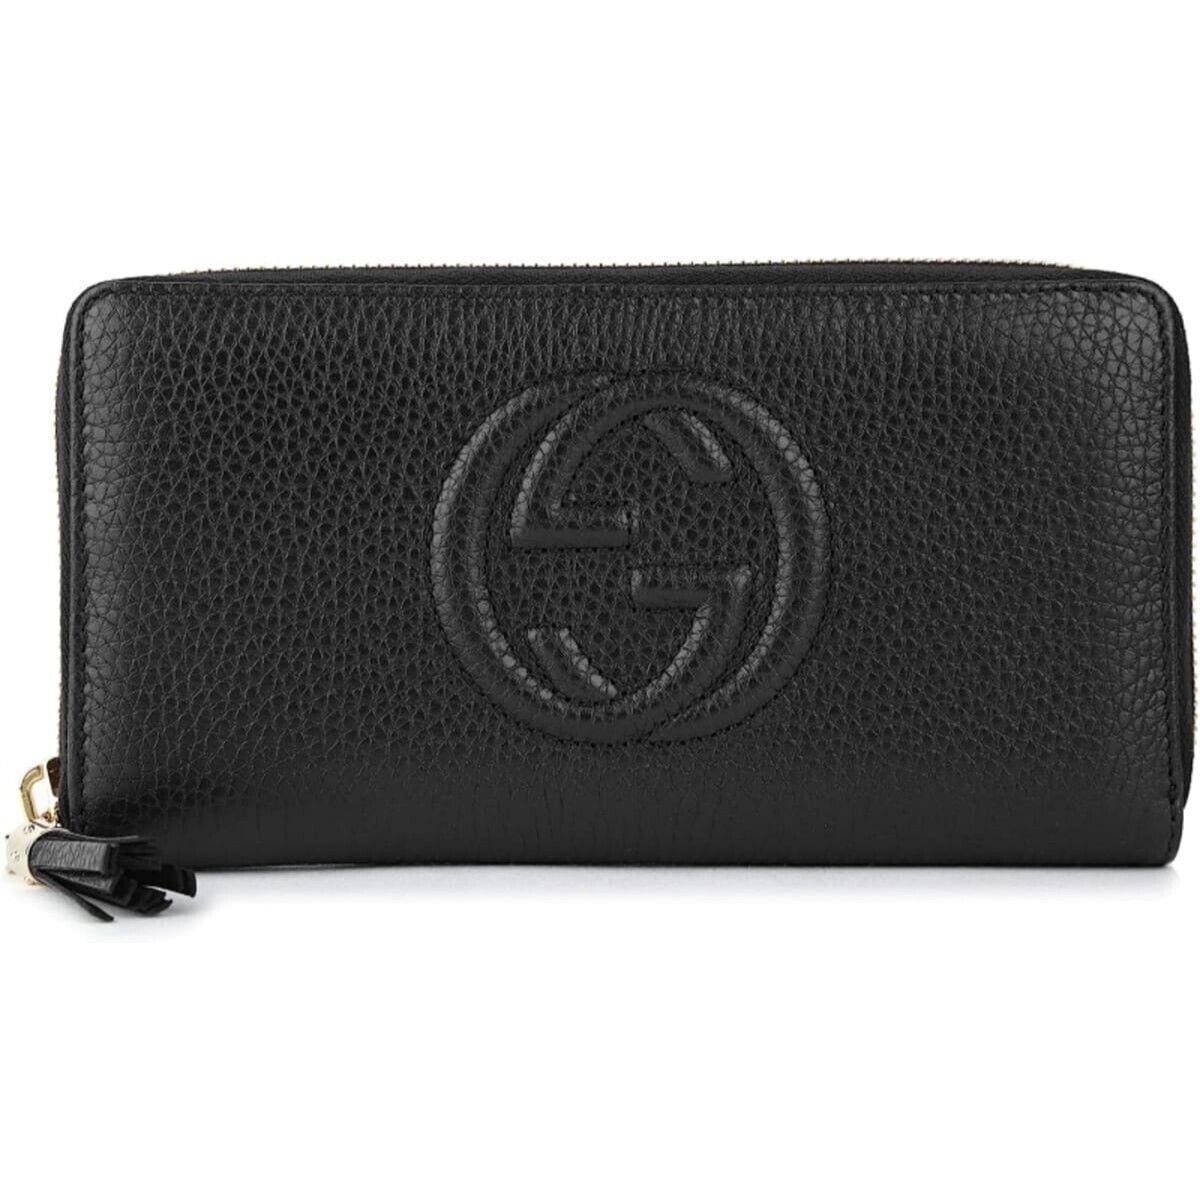 Gucci Soho GG Leather Black Long Wallet Zip Around Large Italy Handbag Purse